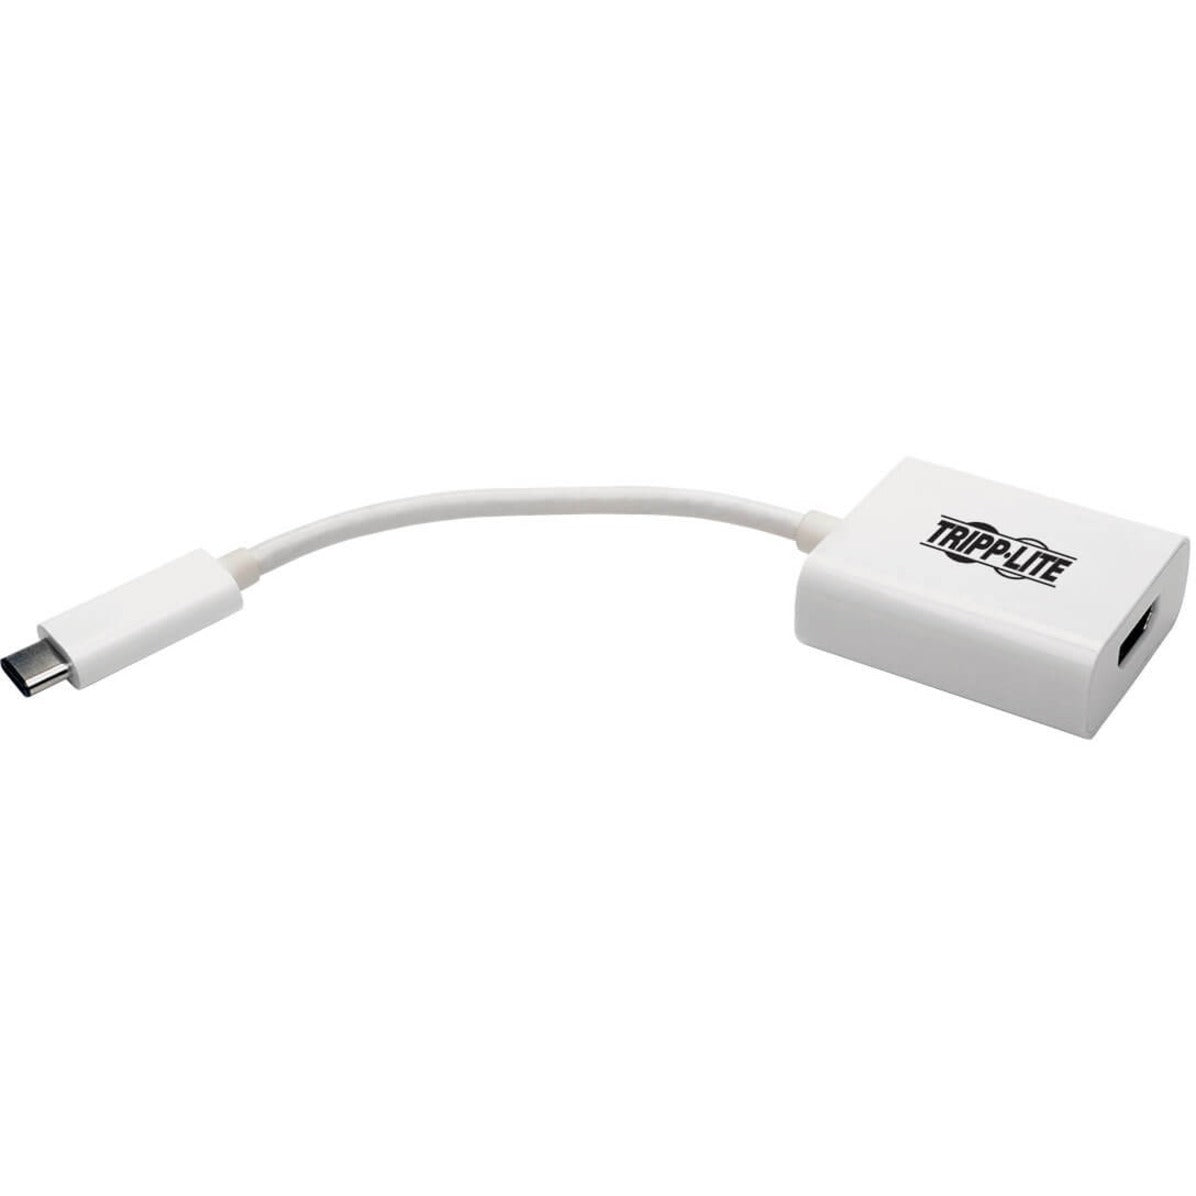 Tripp Lite U444-06N-HD-AM USB 3.1 Gen 1 to HDMI Alternate Mode Dual/Multi-Monitor External Video Graphics Card Adapter, Supports 2 Monitors